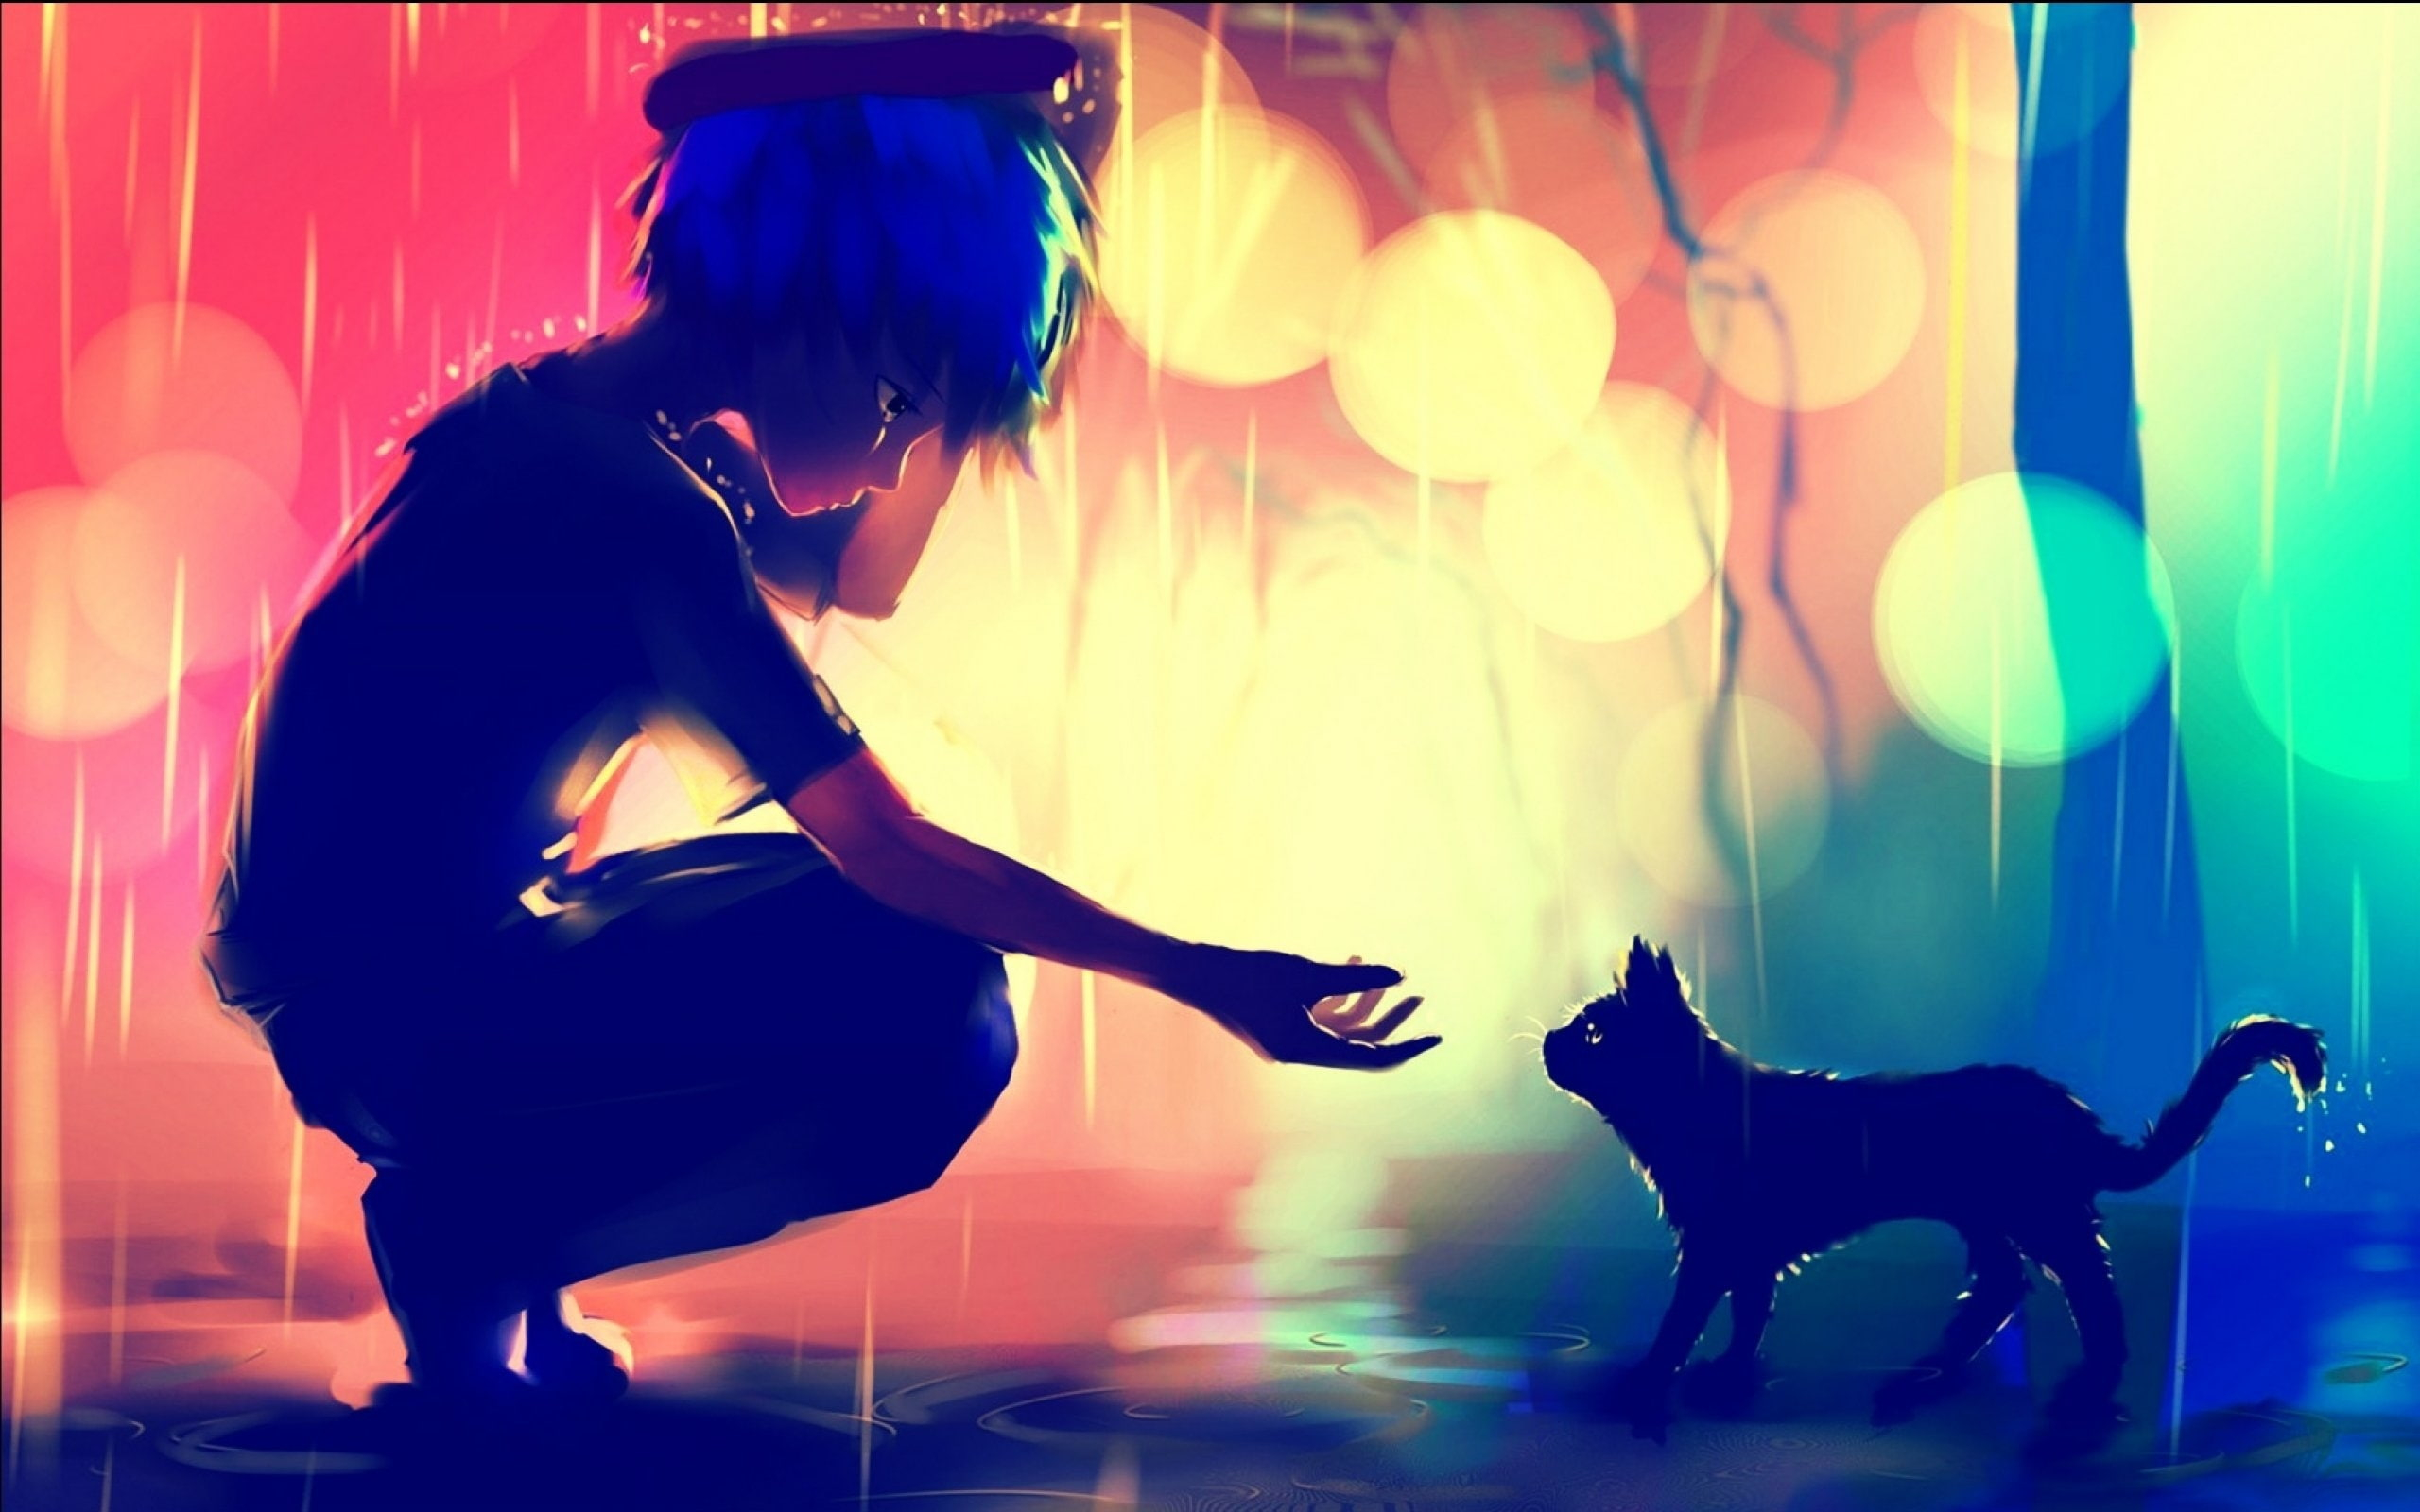 Anime boy, cat, sadness, profile view, bokeh, raining, domestic wallpaper